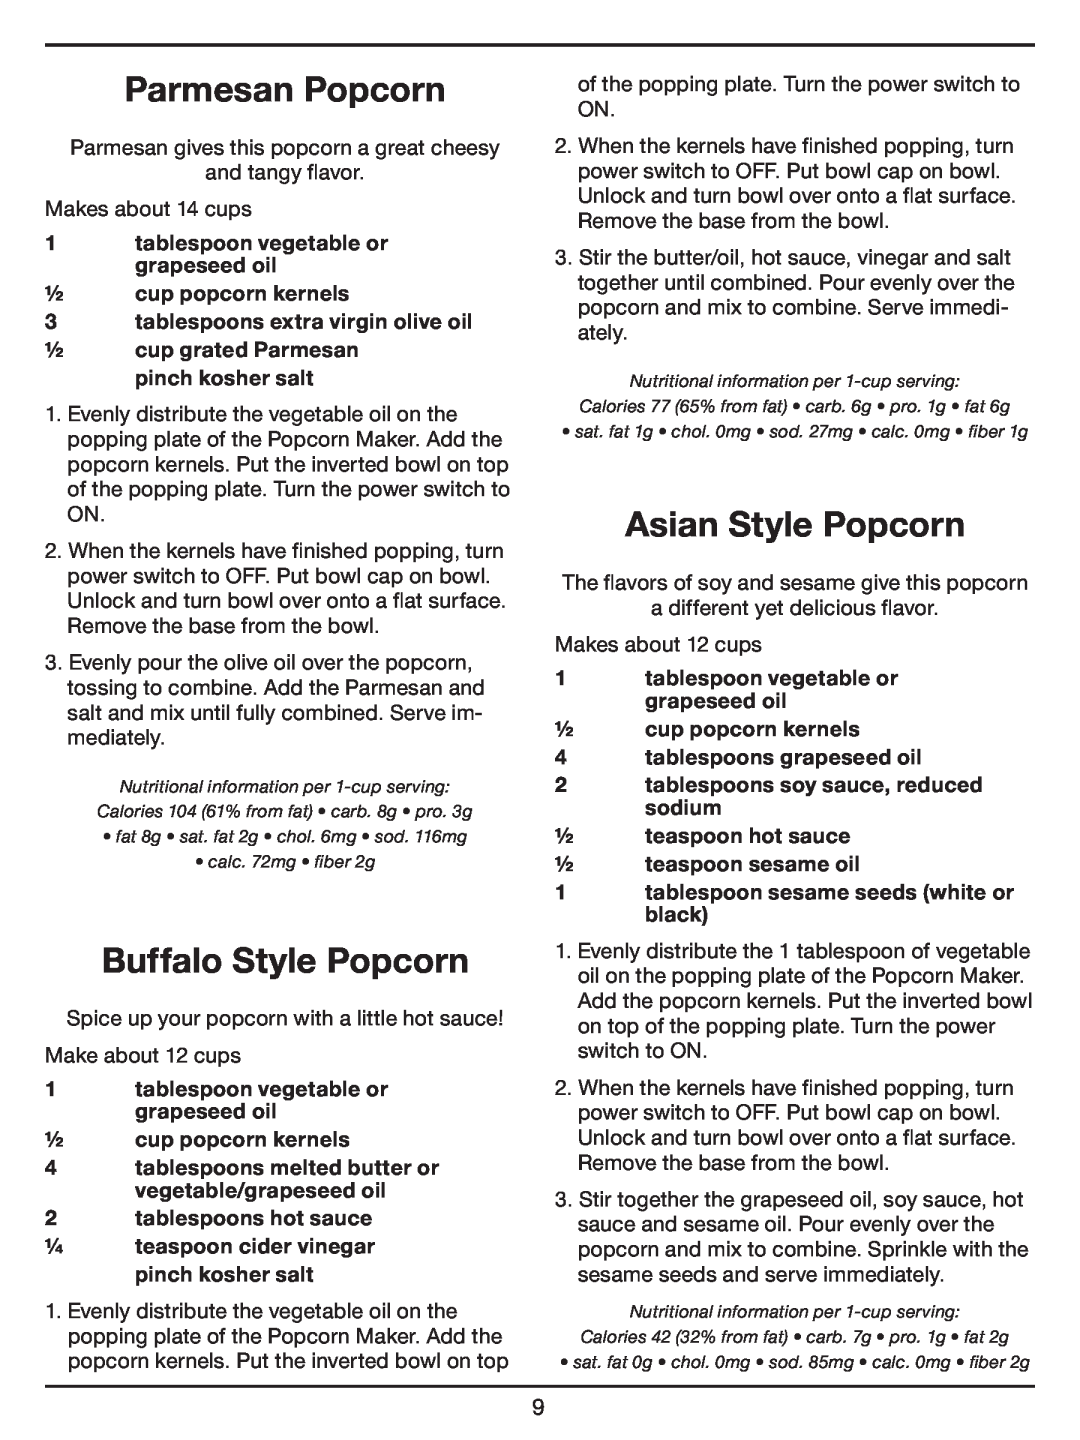 Cuisinart CPM-700 Series manual Parmesan Popcorn, Buffalo Style Popcorn, Asian Style Popcorn 